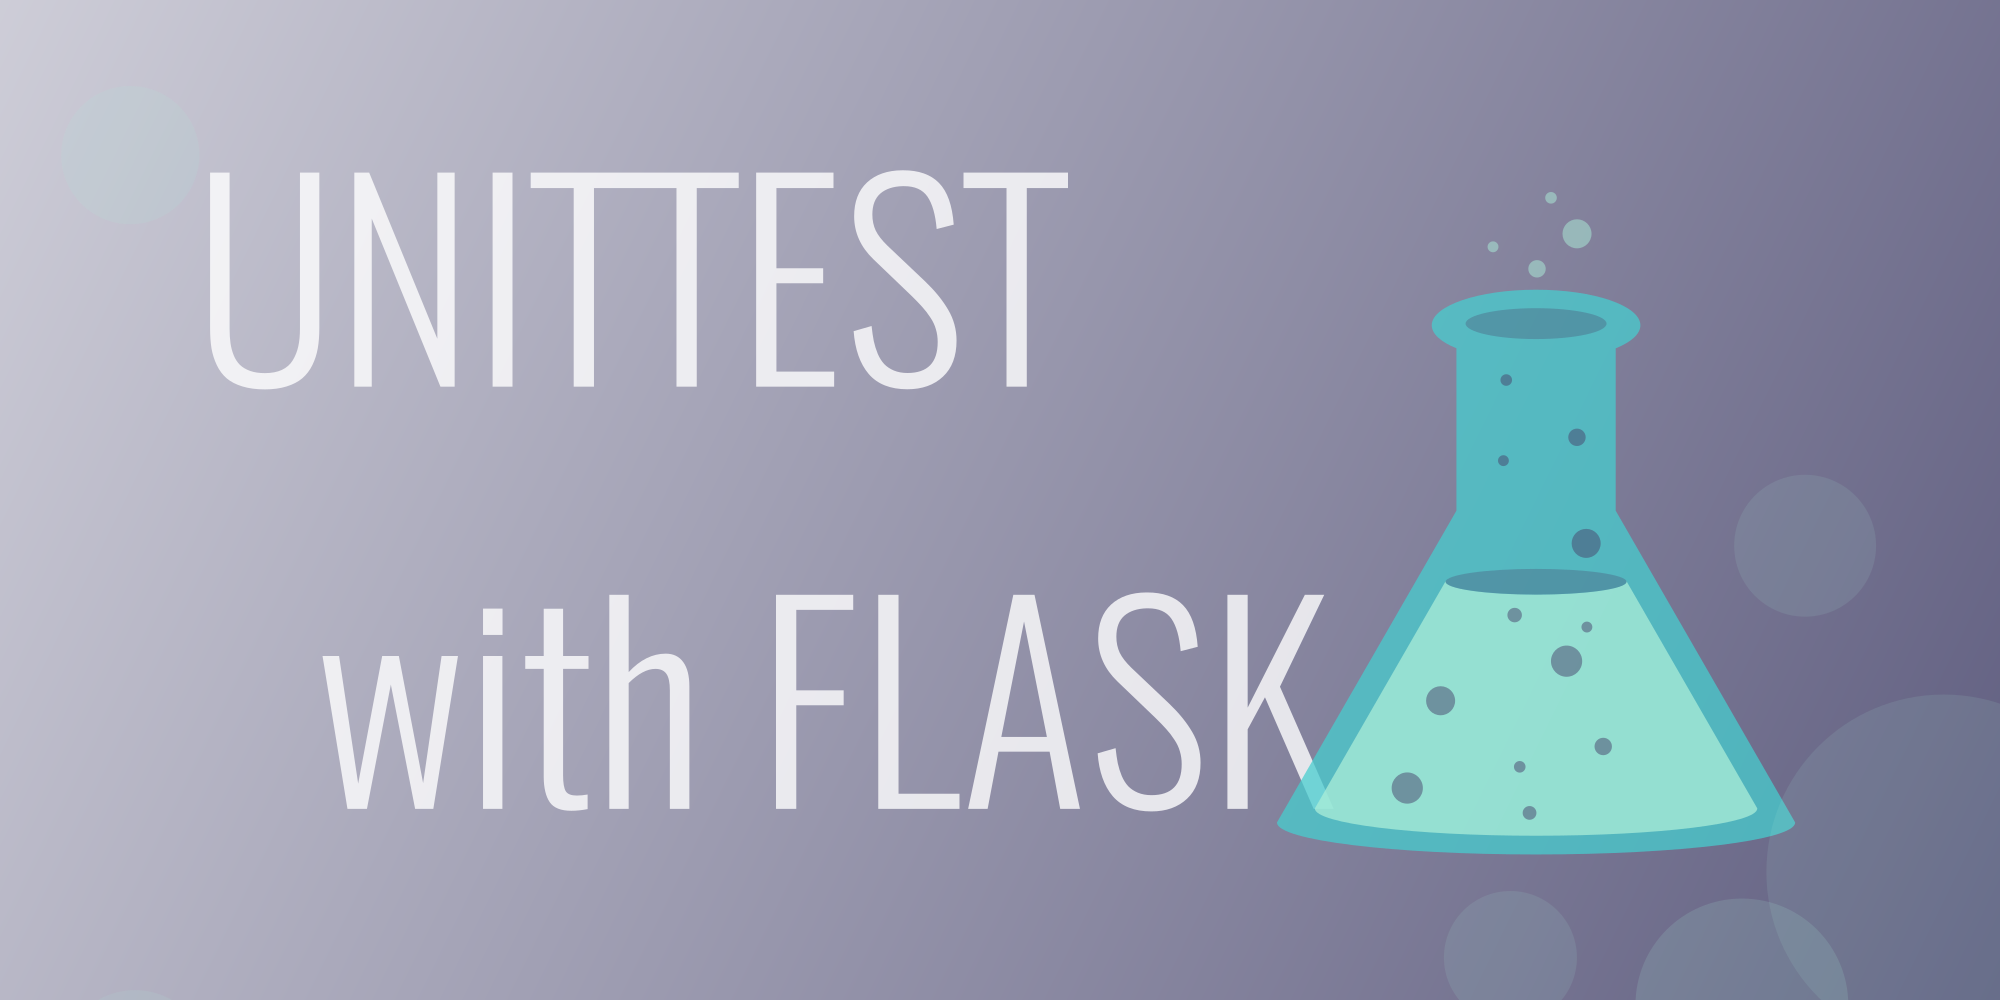 Unittest your Flask Application - Test your File Upload Method